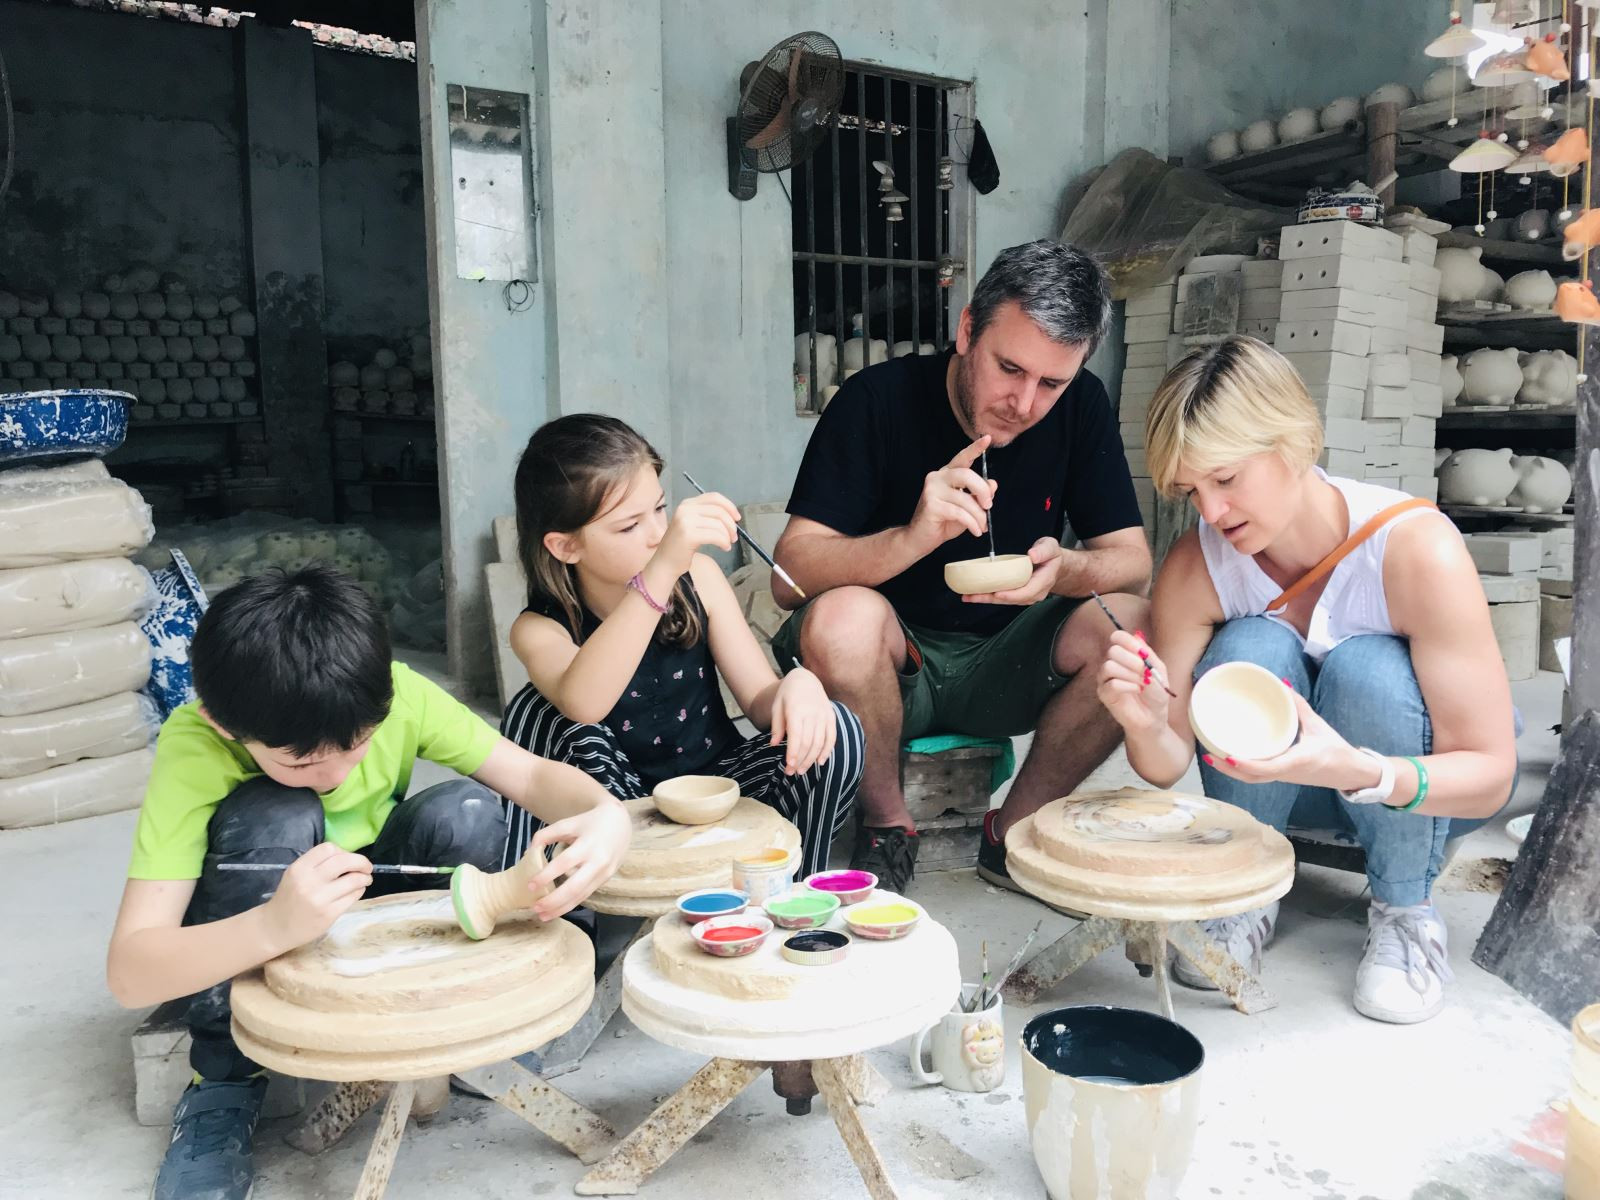 Bat Trang Pottery Village